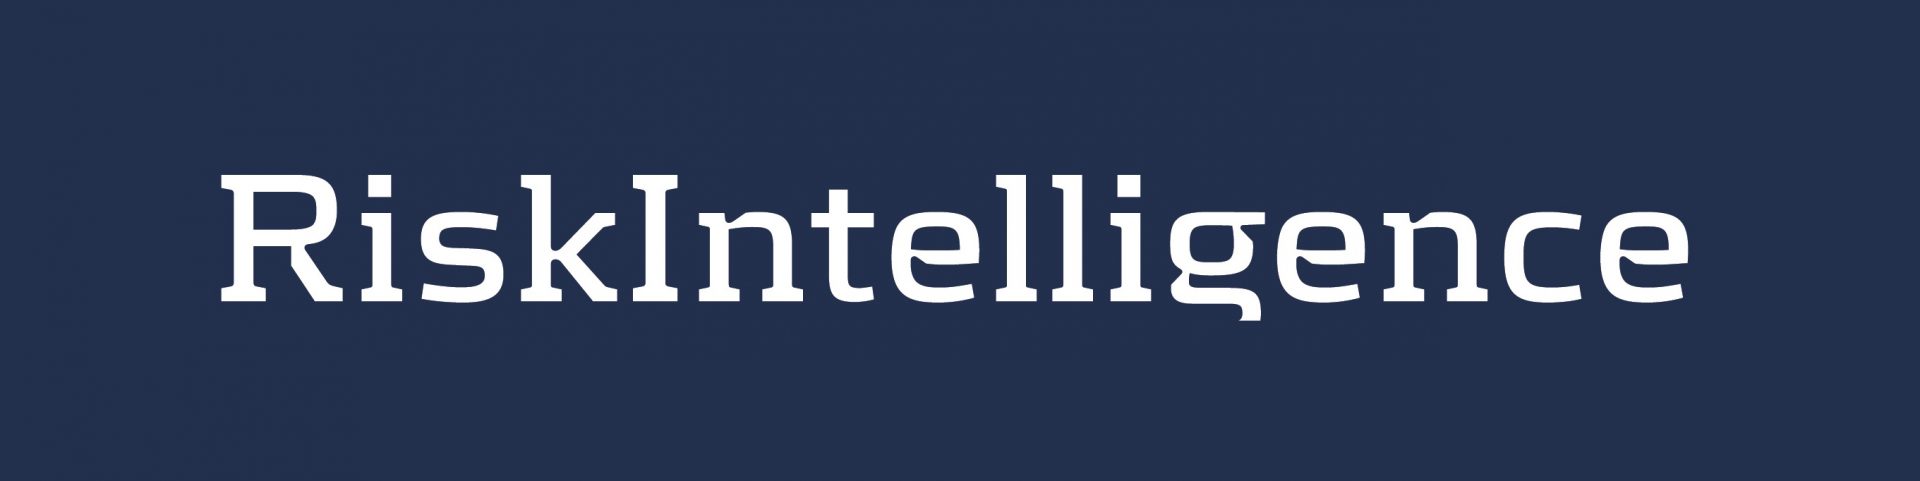 risk-intelligence-logo-square